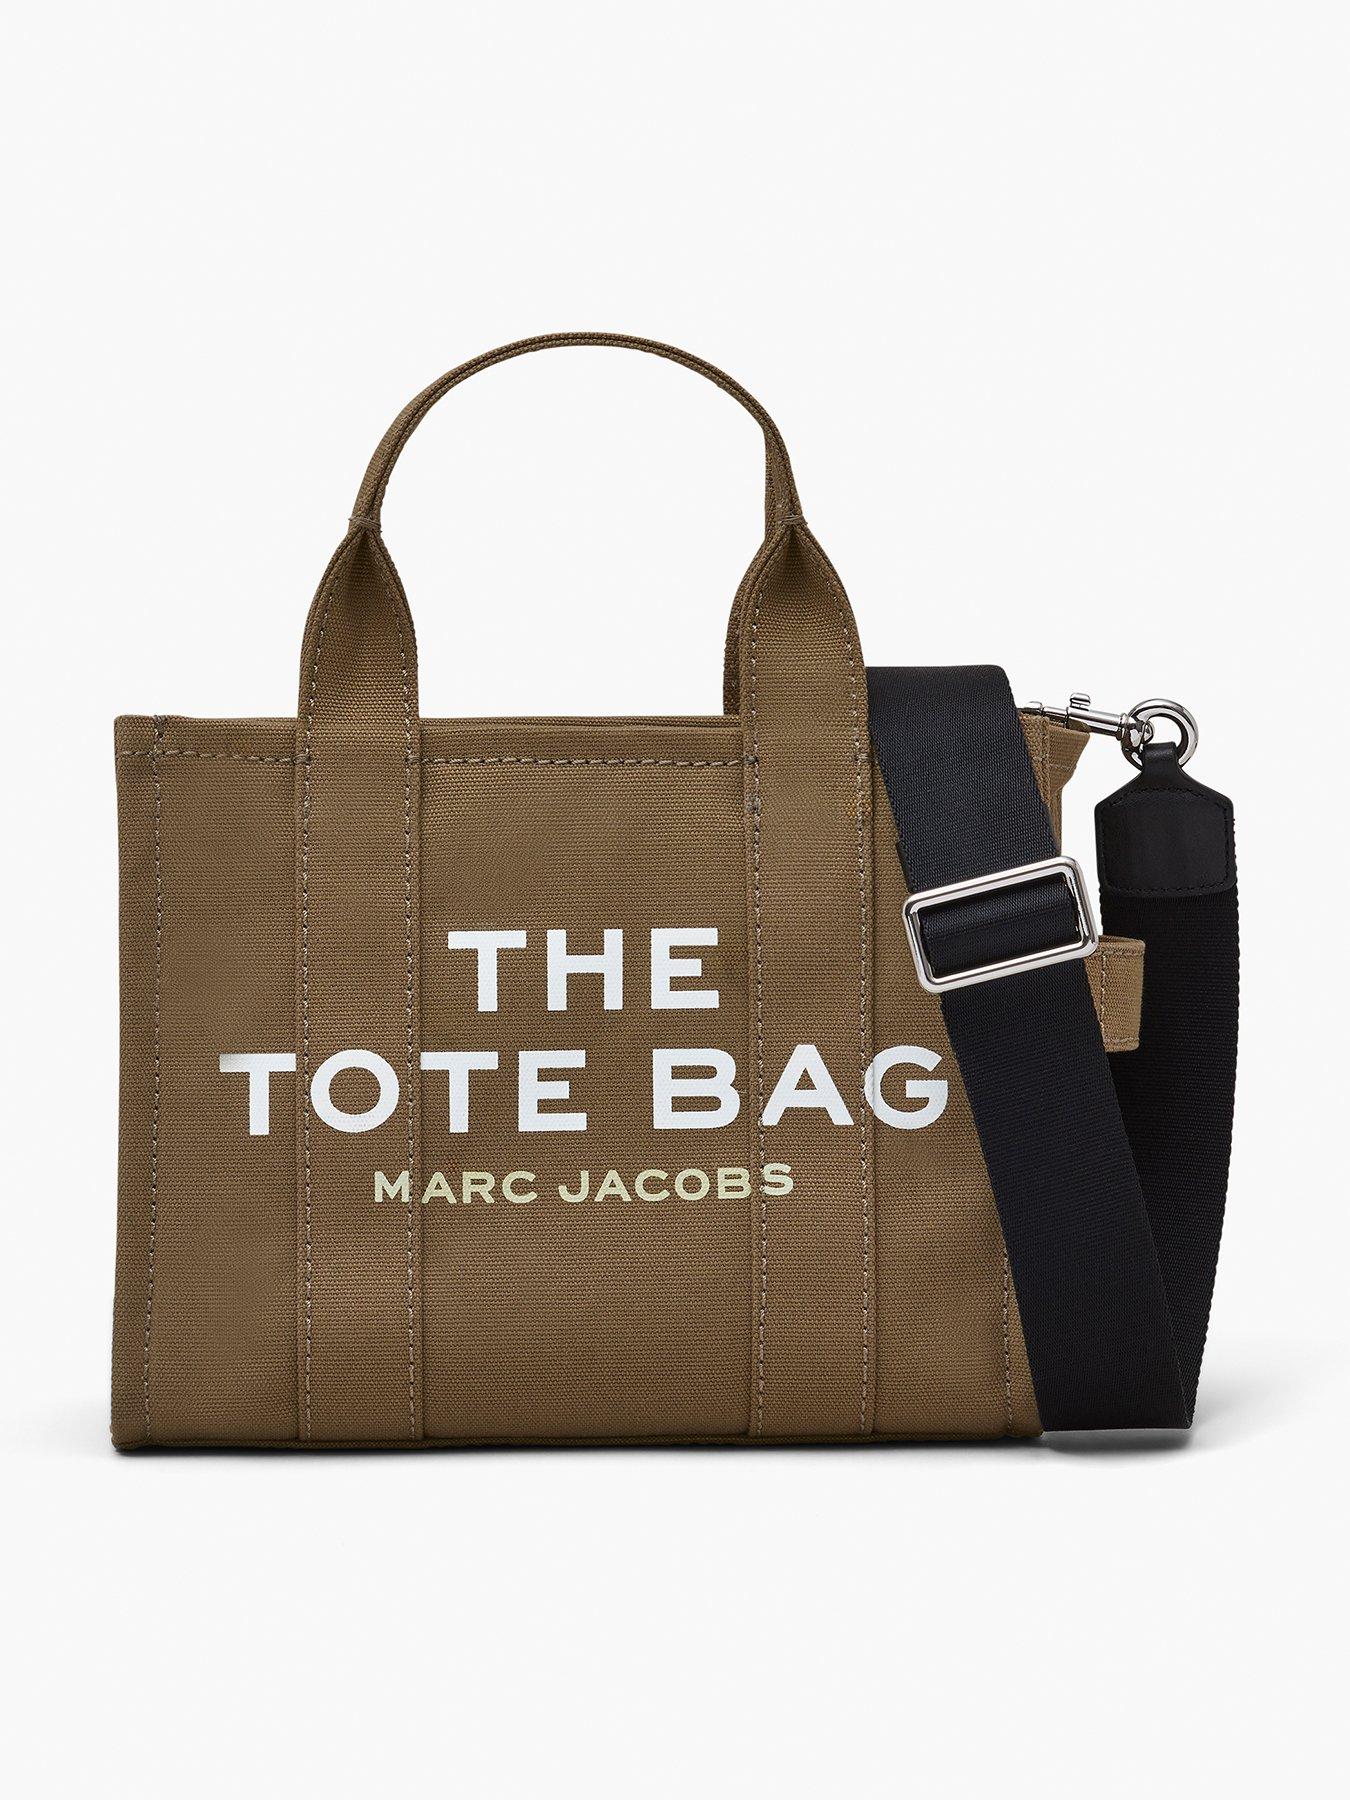 Marc Jacobs The Tote Bag mini size Beige khaki color blog.knak.jp